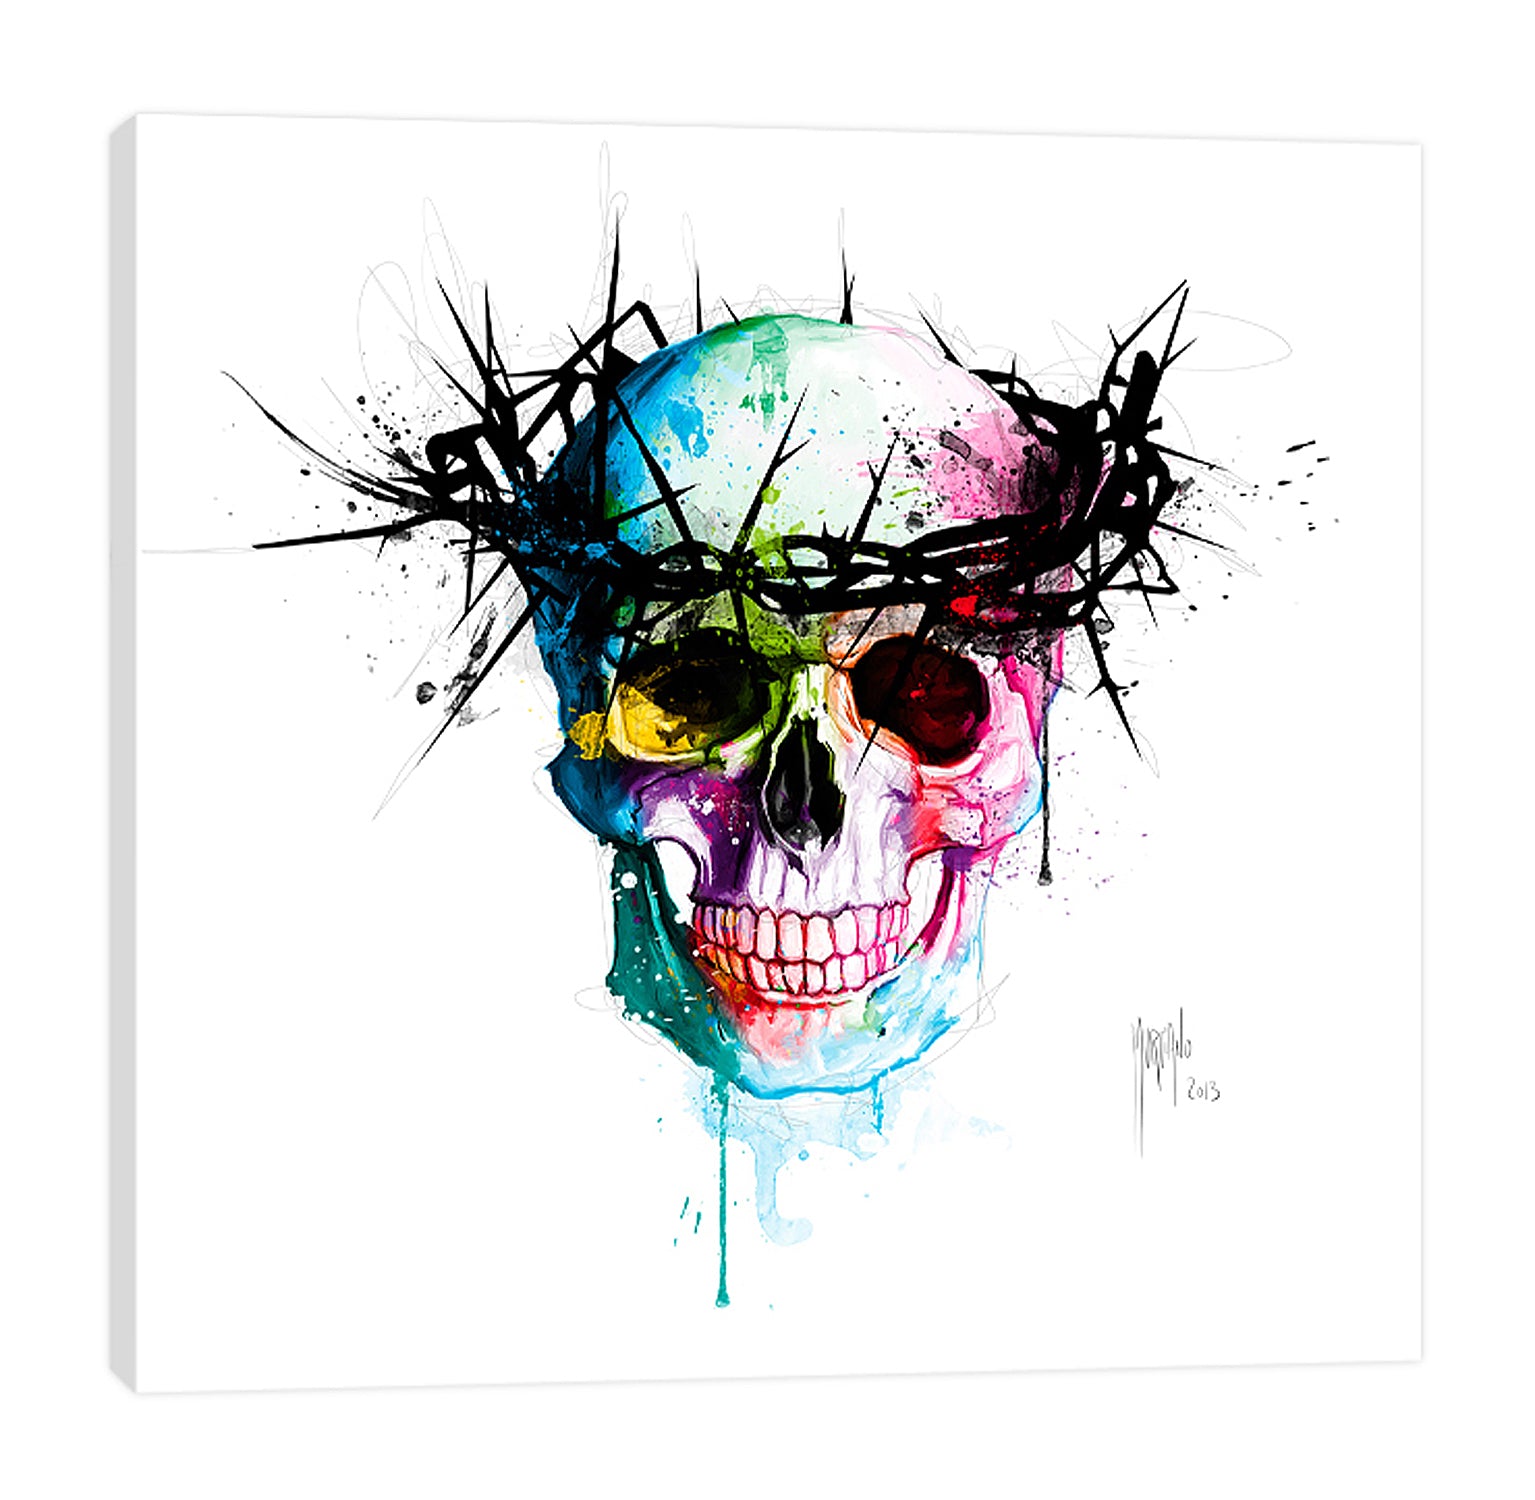 Patrice-Murciano,Modern & Contemporary,People,jesus skull,skulls,bones,thorns,paint drips,lines,ombre,Blue,Black,Gray,White